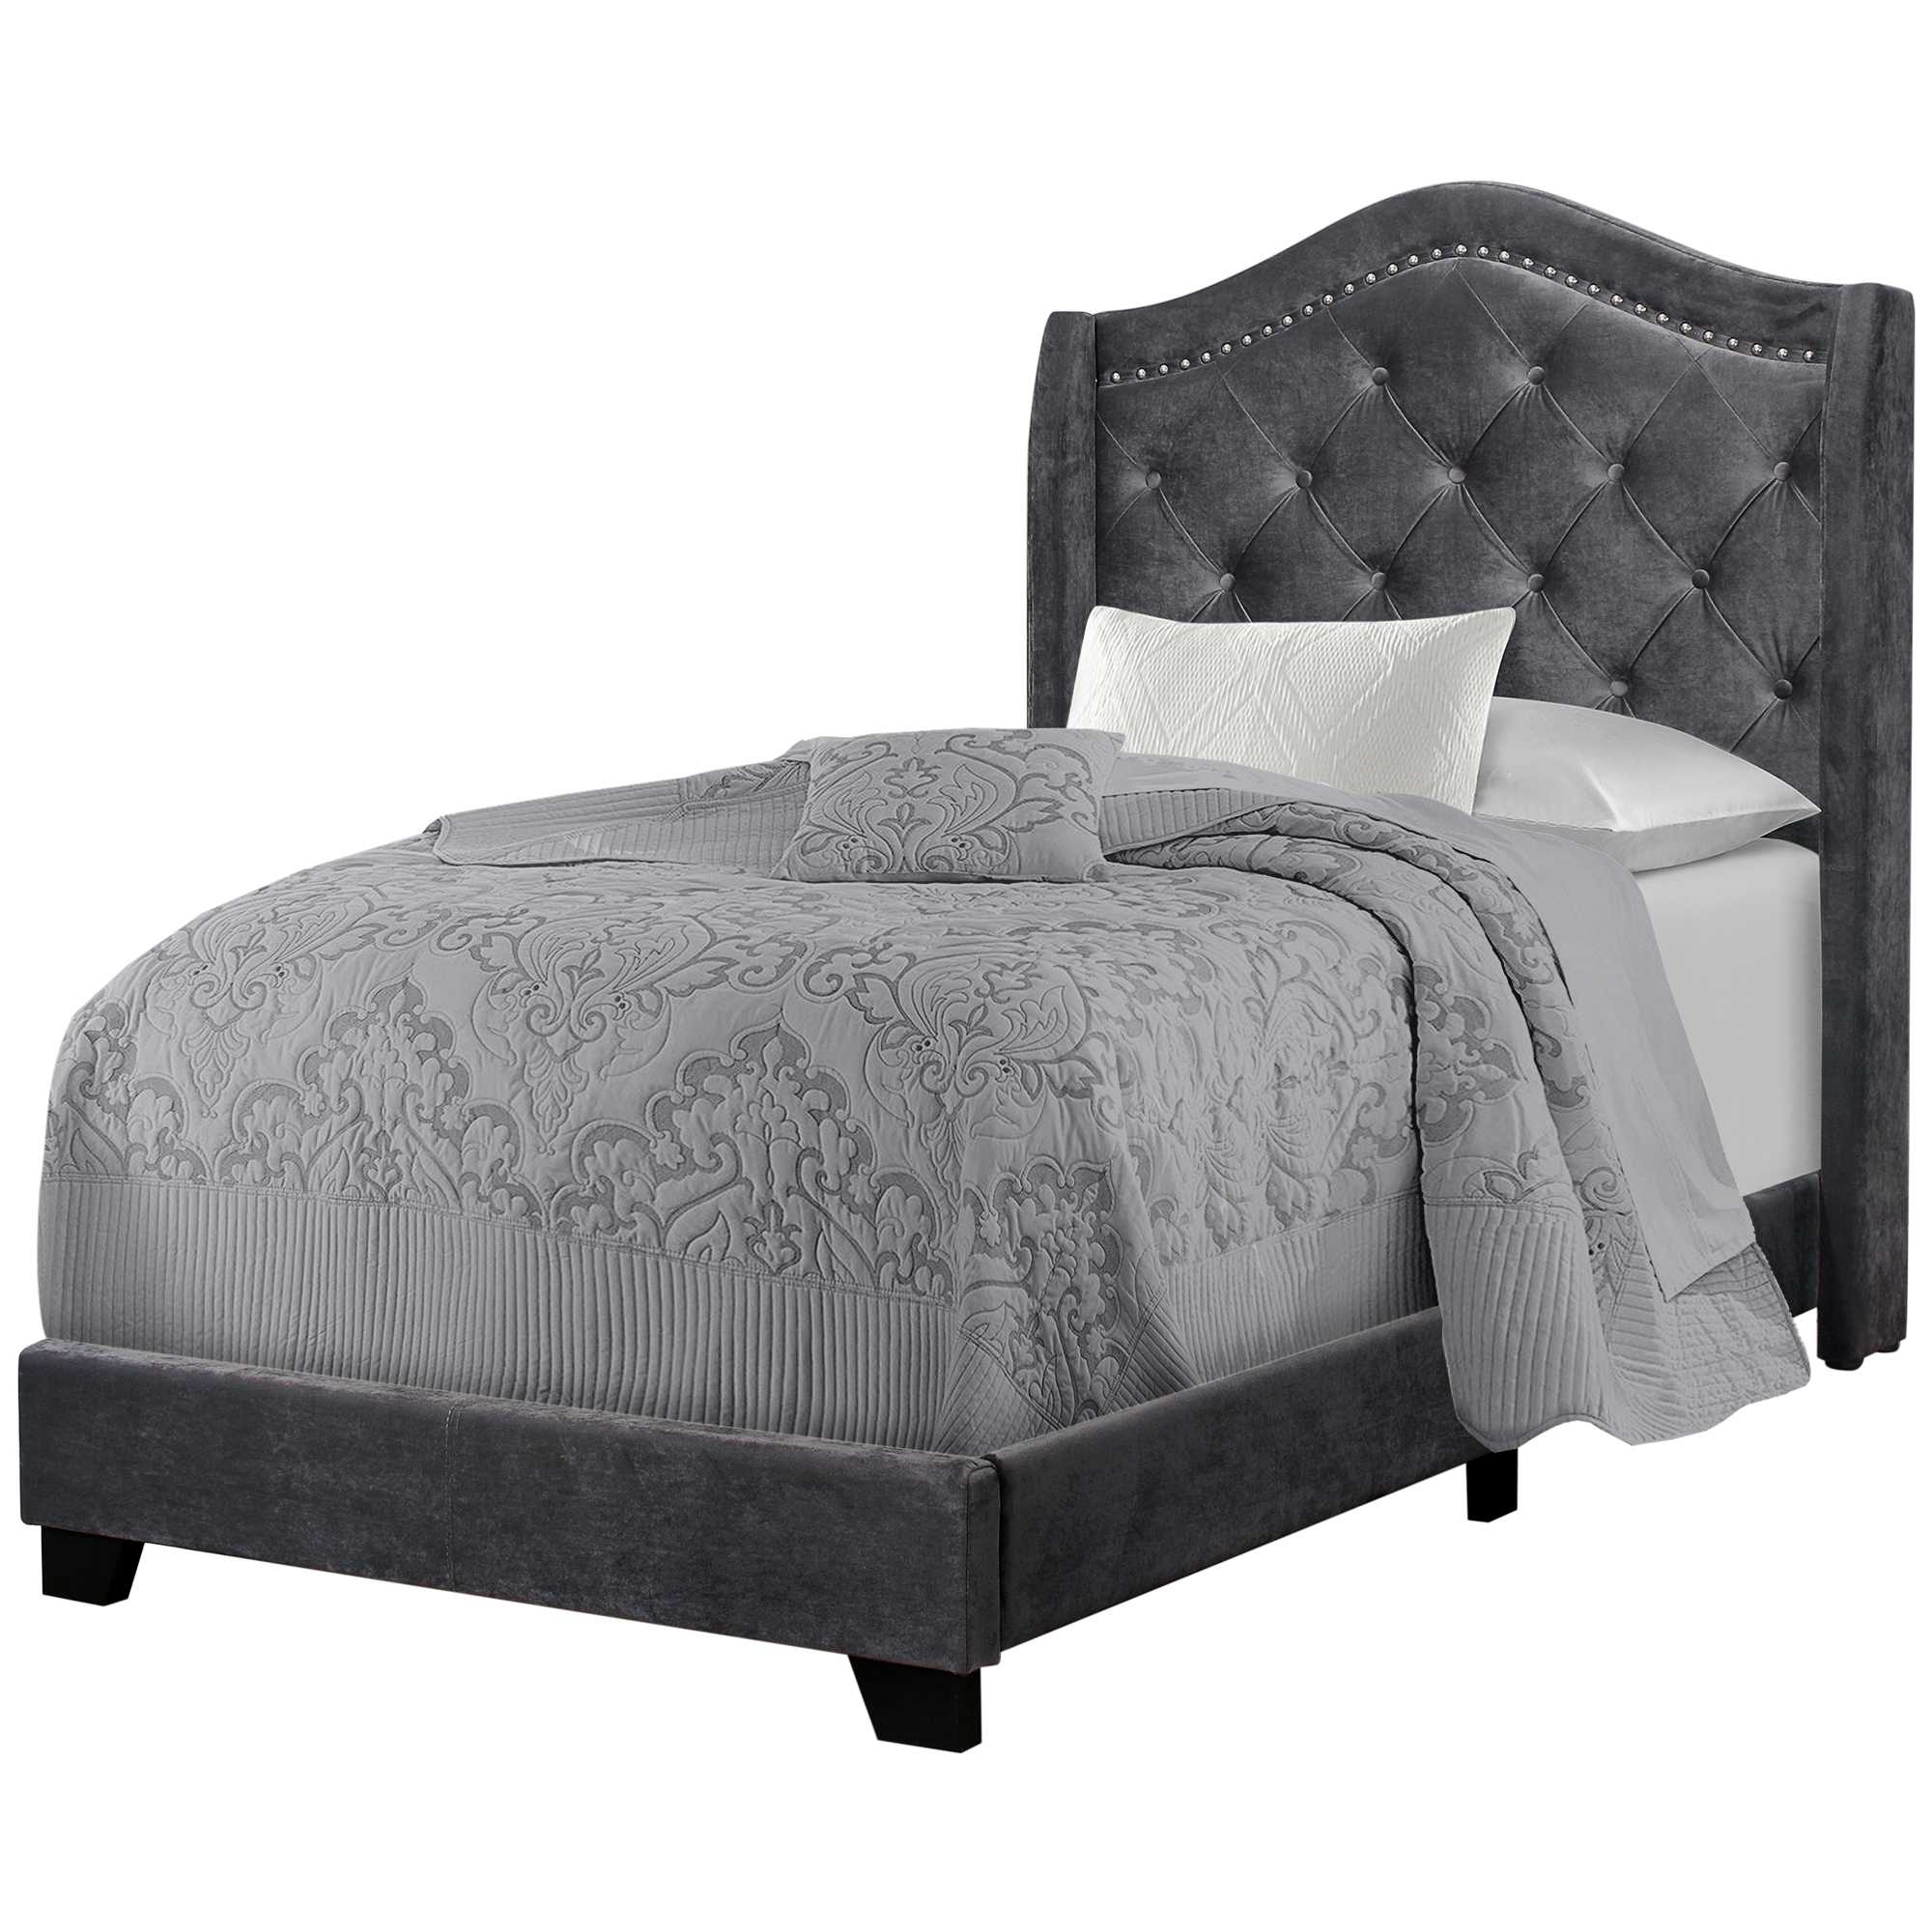 45.75" x 82.75" x 56.5" Dark Grey Foam Solid Wood Velvet Twin Size Bed With A Chrome Trim